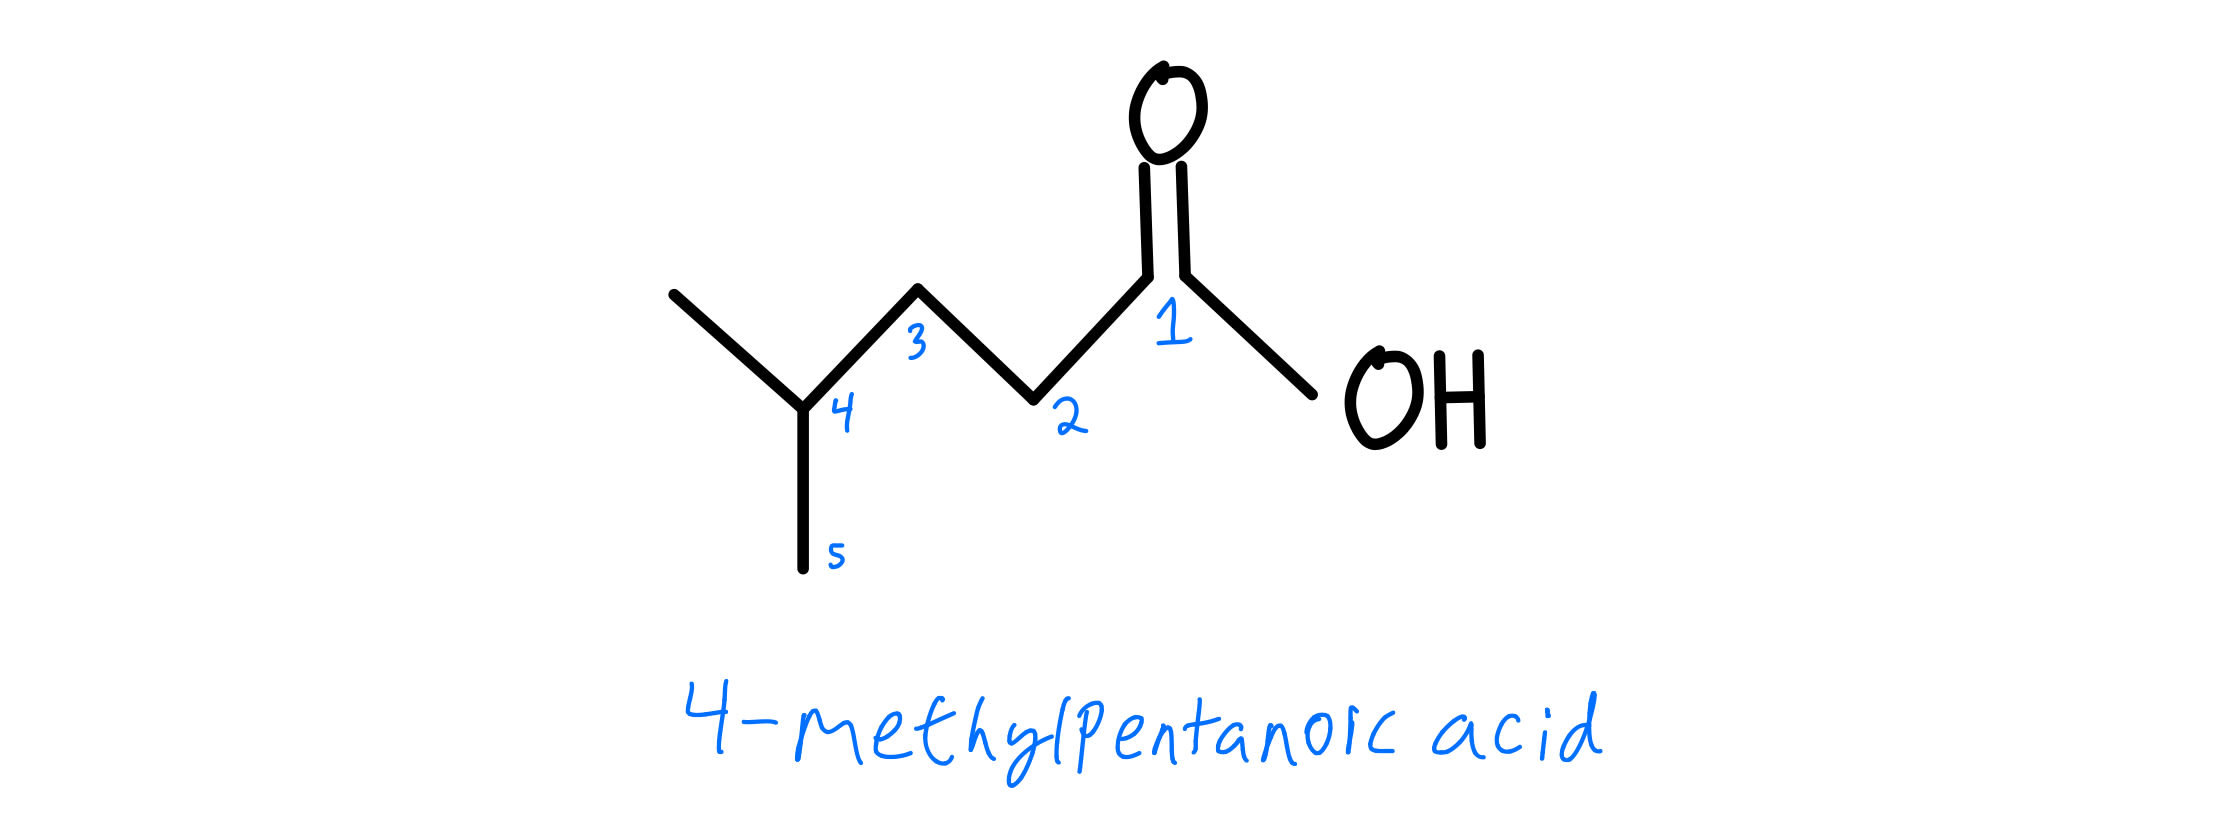 4-methylpentanoic acid